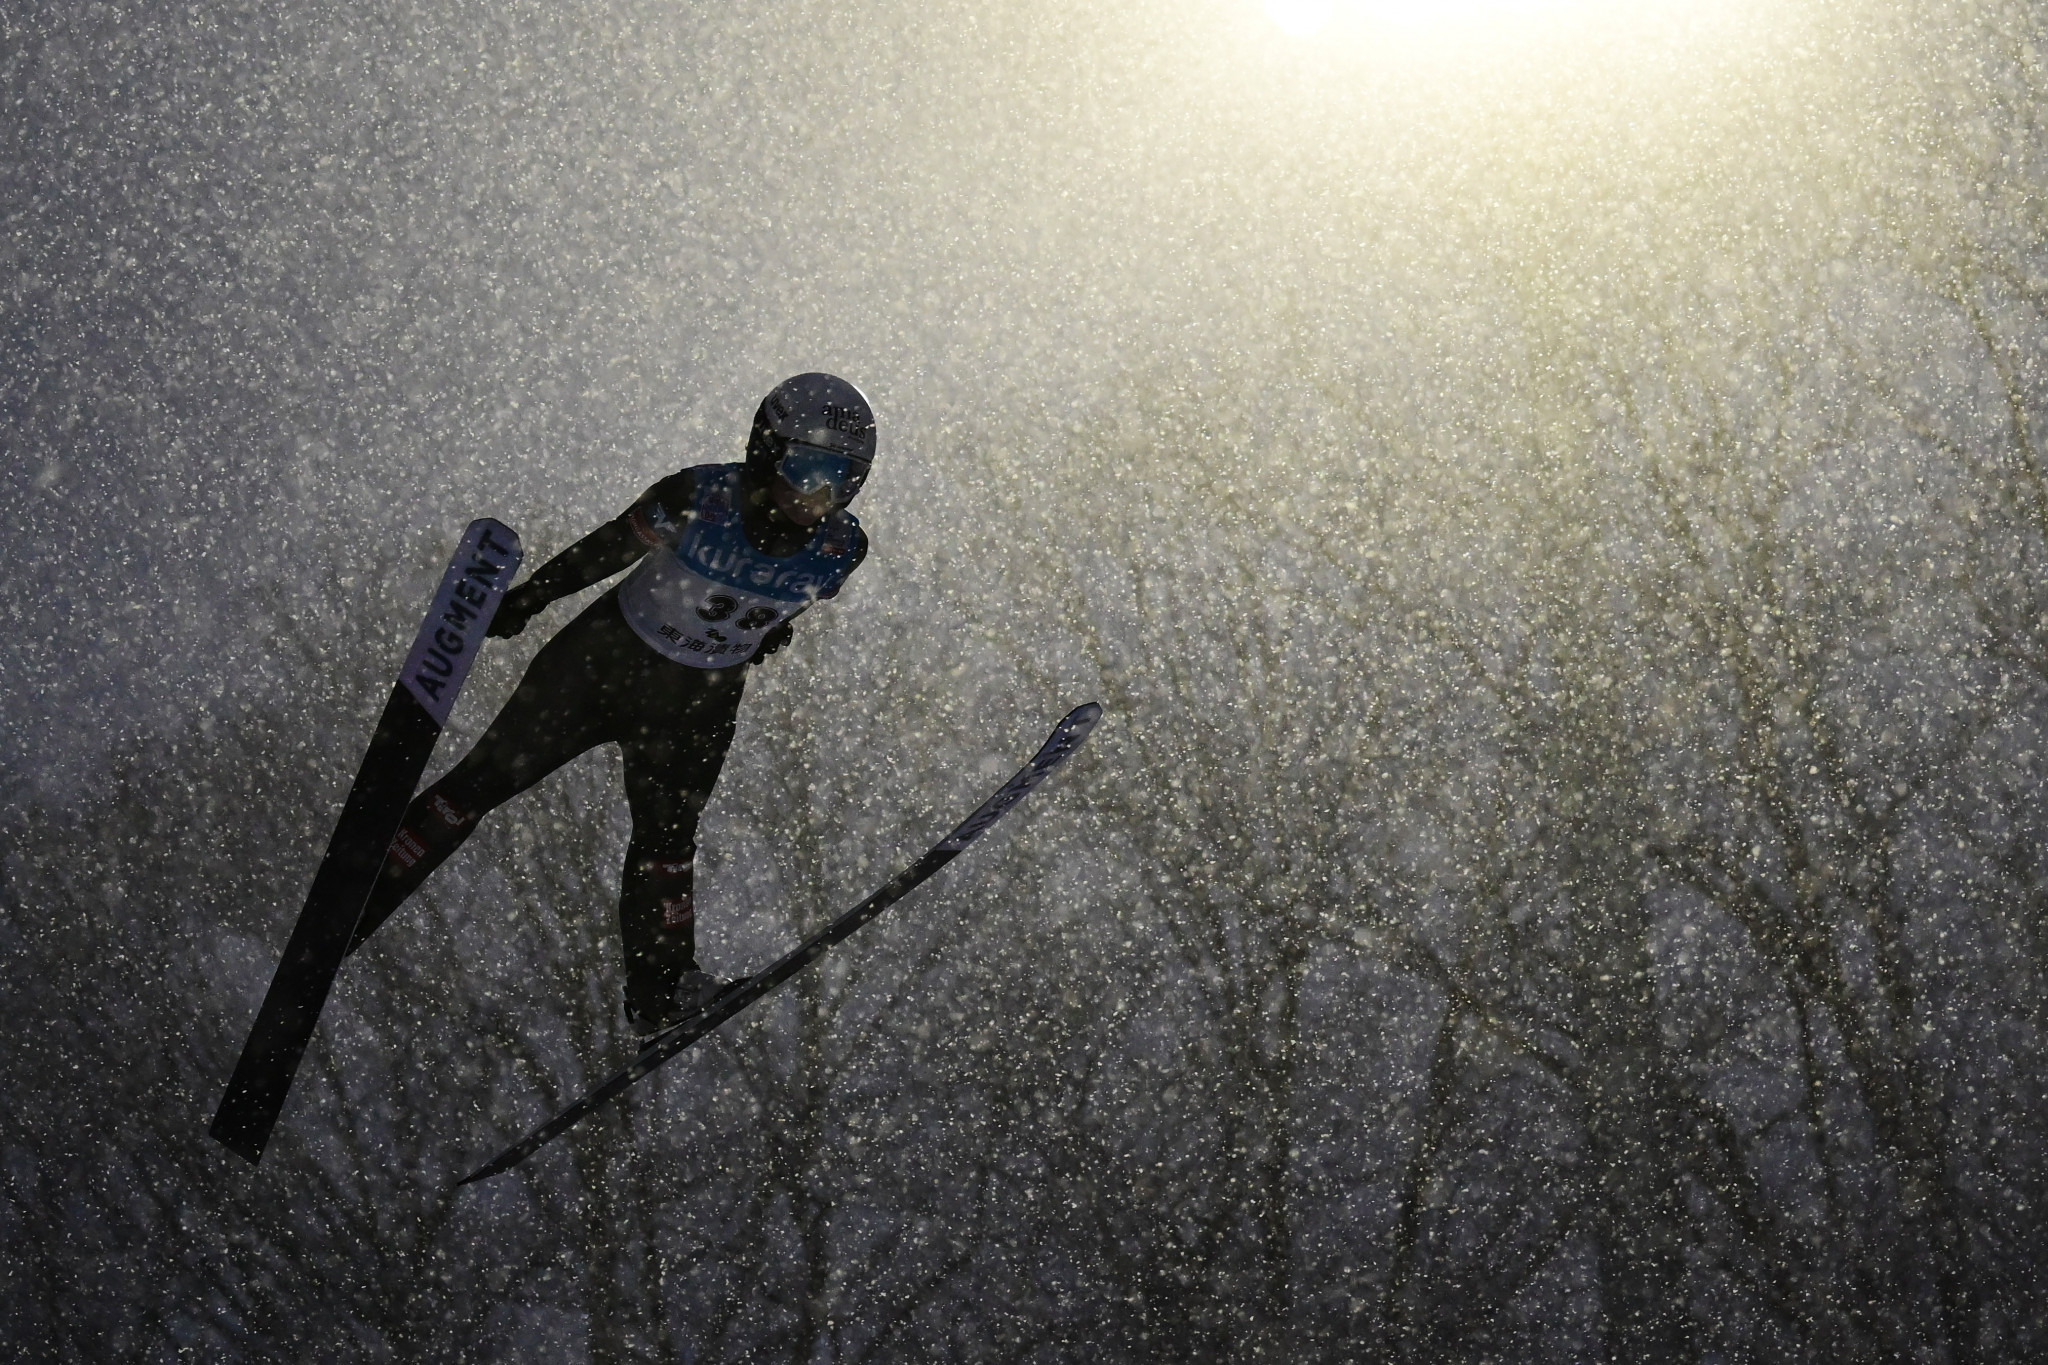 Kreuzer edges Pinkelnig to take gold at FIS Ski Jumping World Cup in Hinzenbach